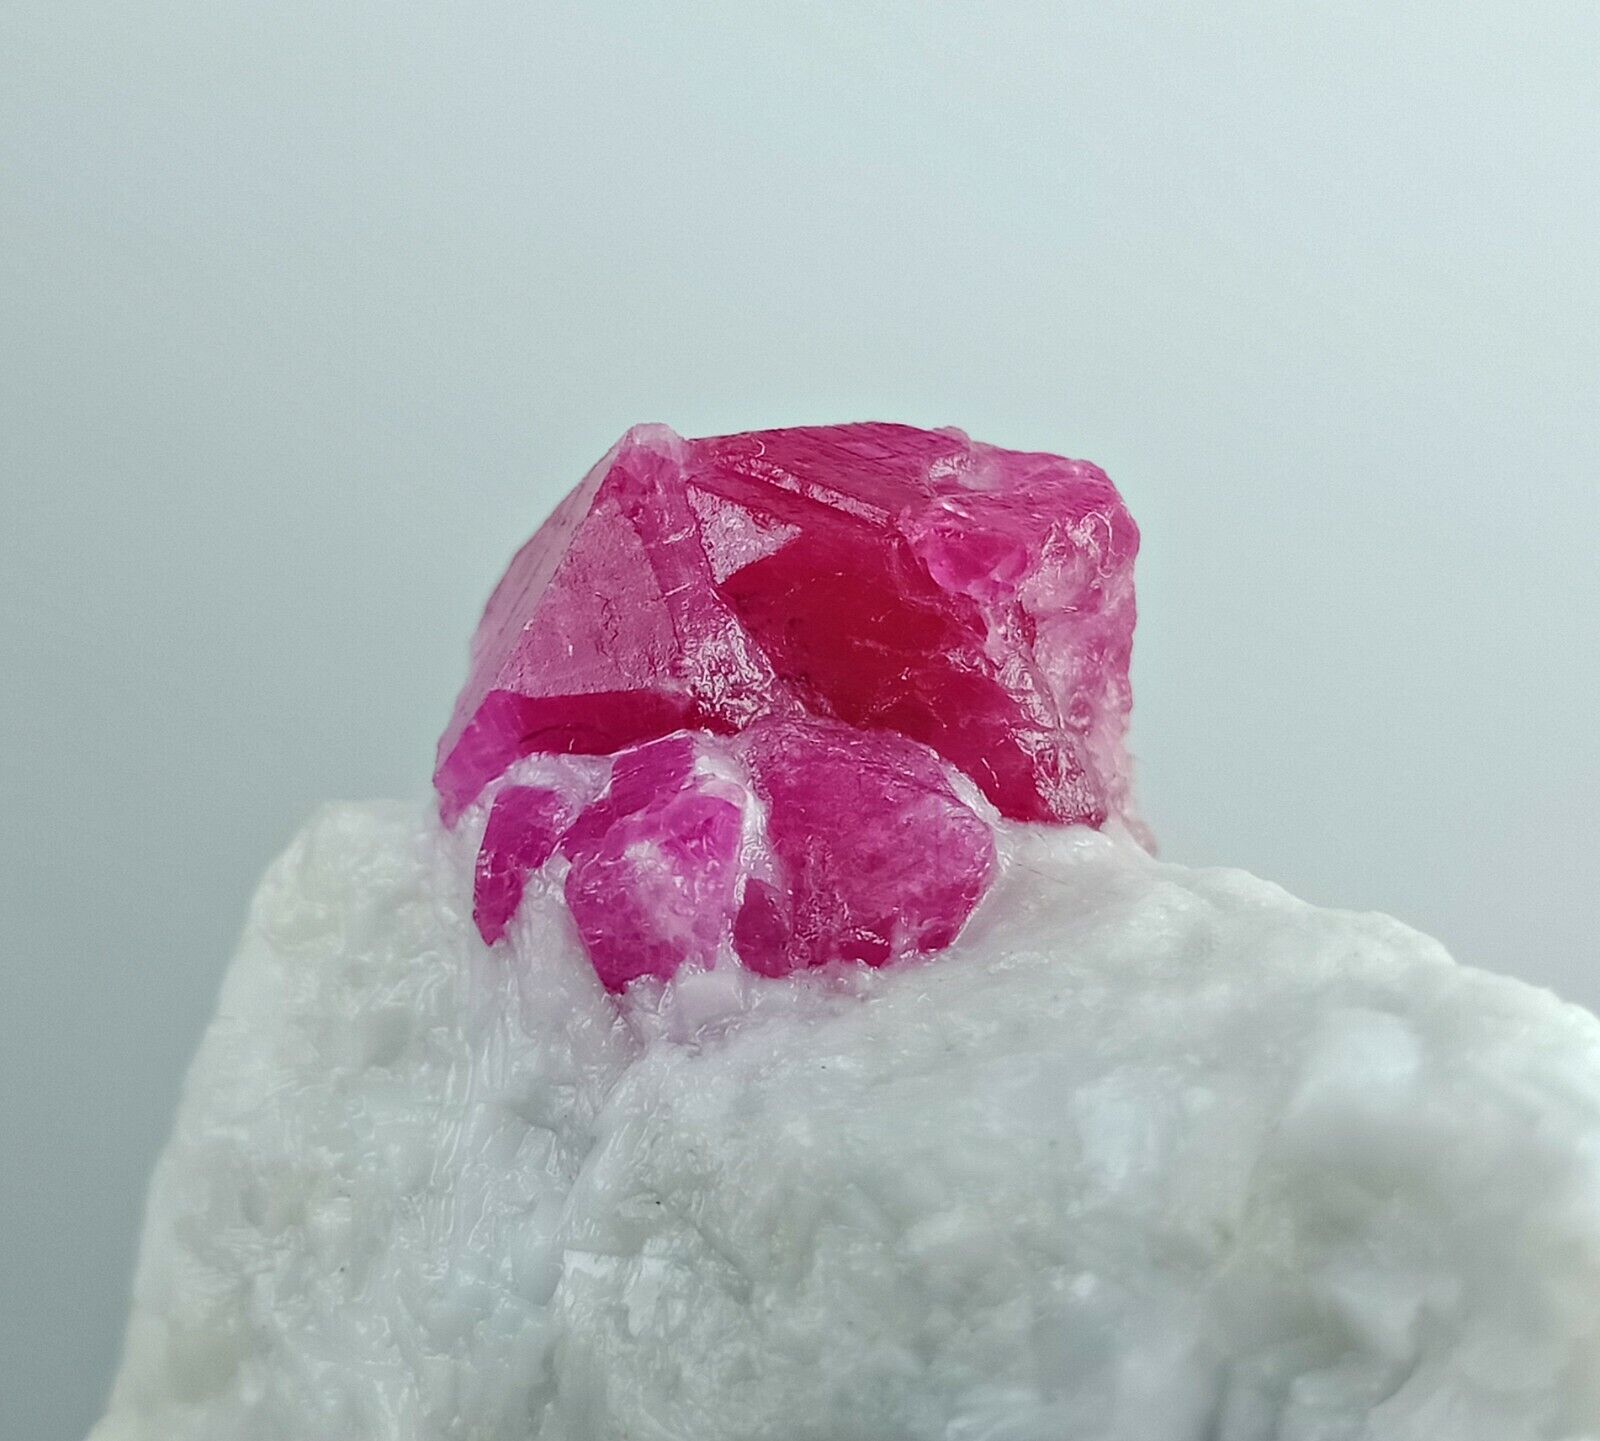 120 CT Excellent, Top quality Ruby Crystal on matrix @ Jegdalek Afghanistan